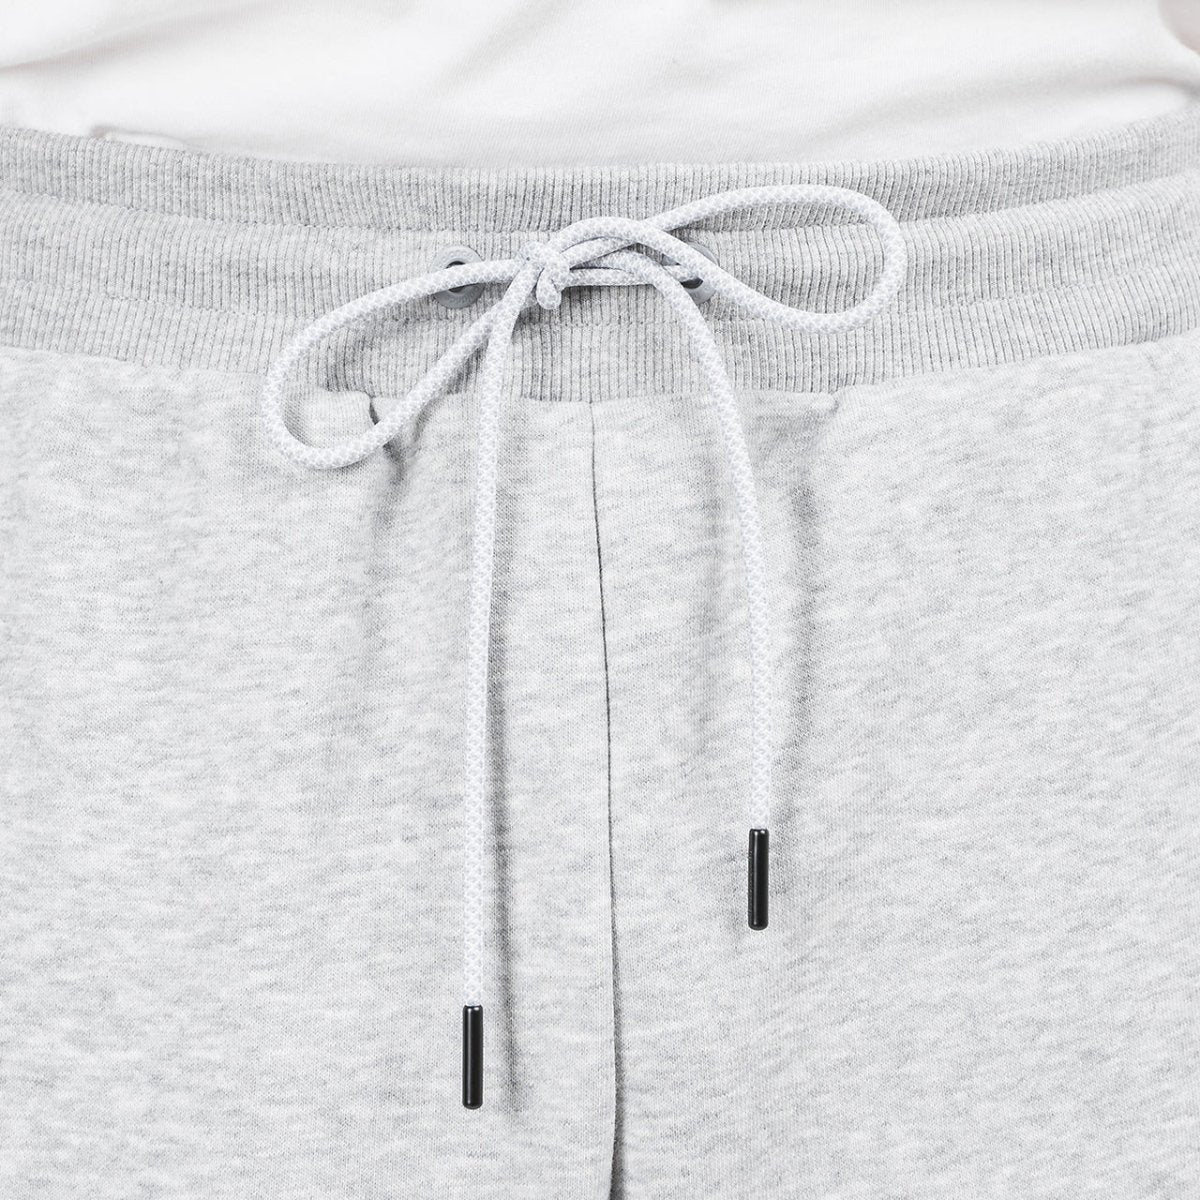 New Balance Athletics Fleece Pants (Grau)  - Allike Store